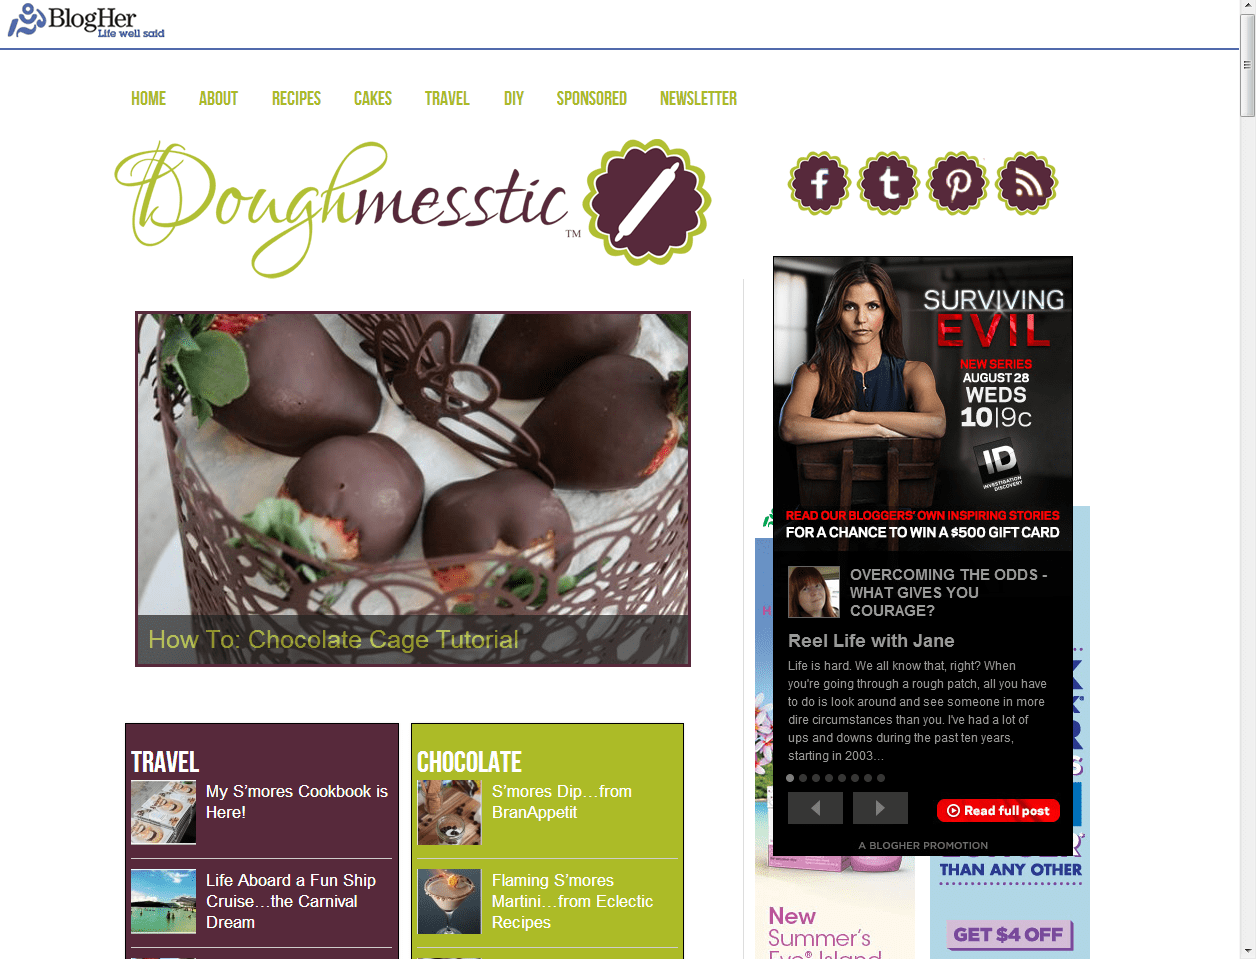 She’s Becoming Doughmesstic Website redesign